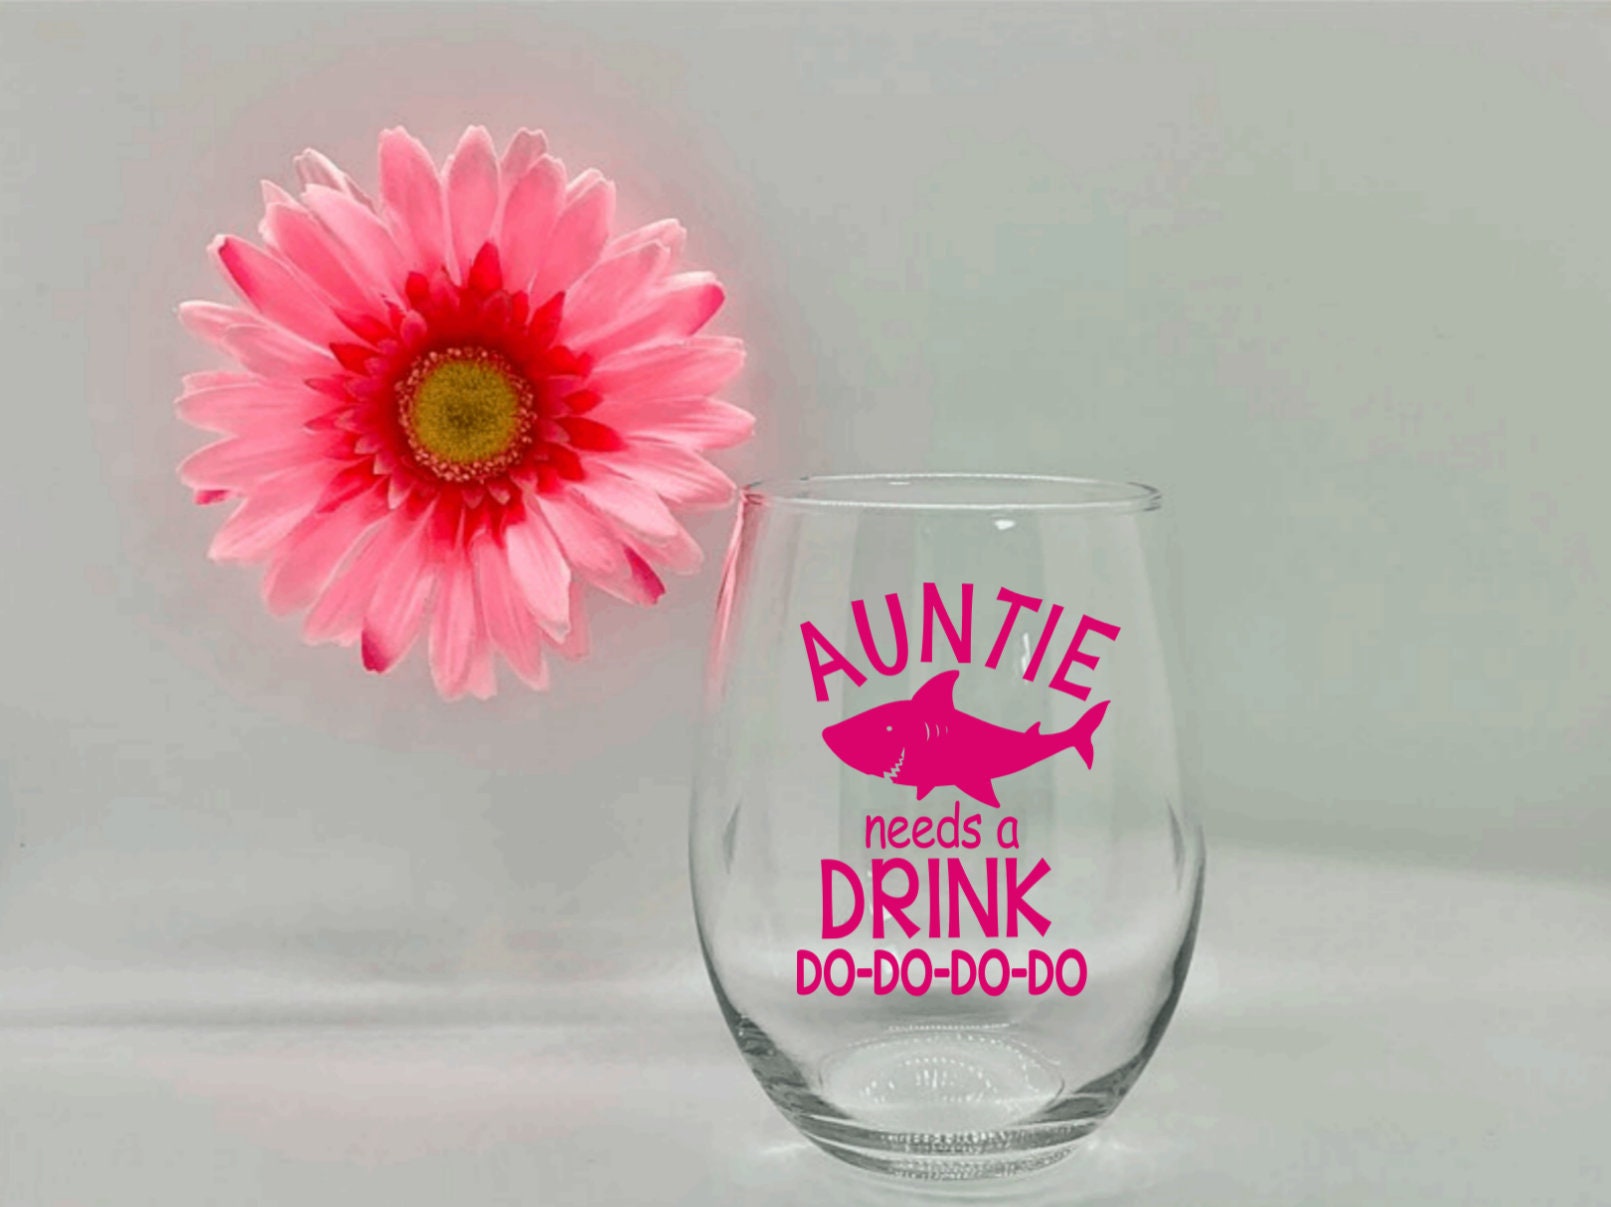 Aunt Like A Mom Only Cooler Engraved Wine Tumbler - LemonsAreBlue